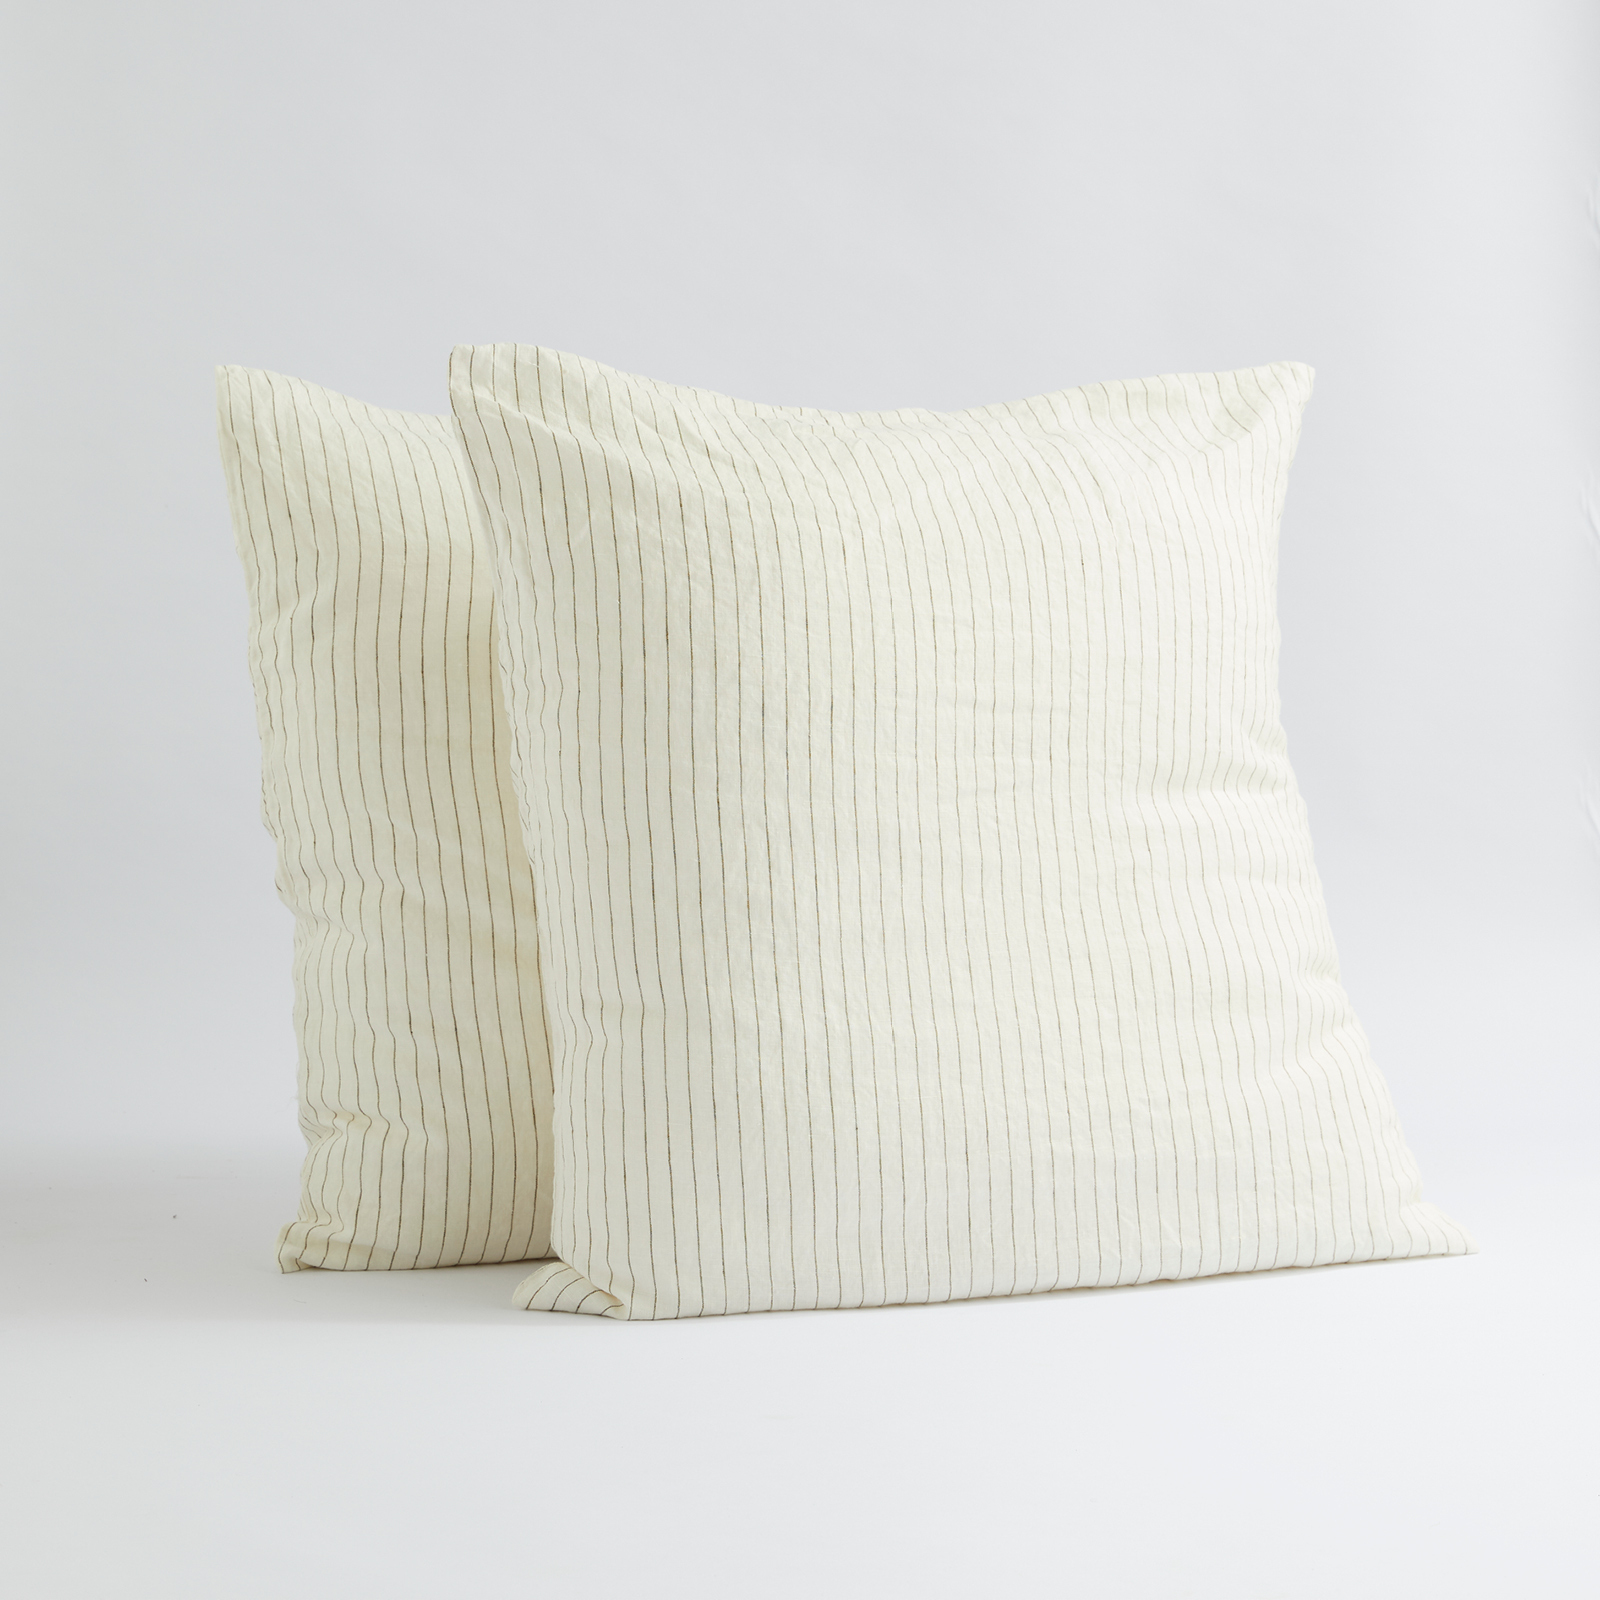 100% Pure Linen European Pillowcase Set in Olive Stripes (2)